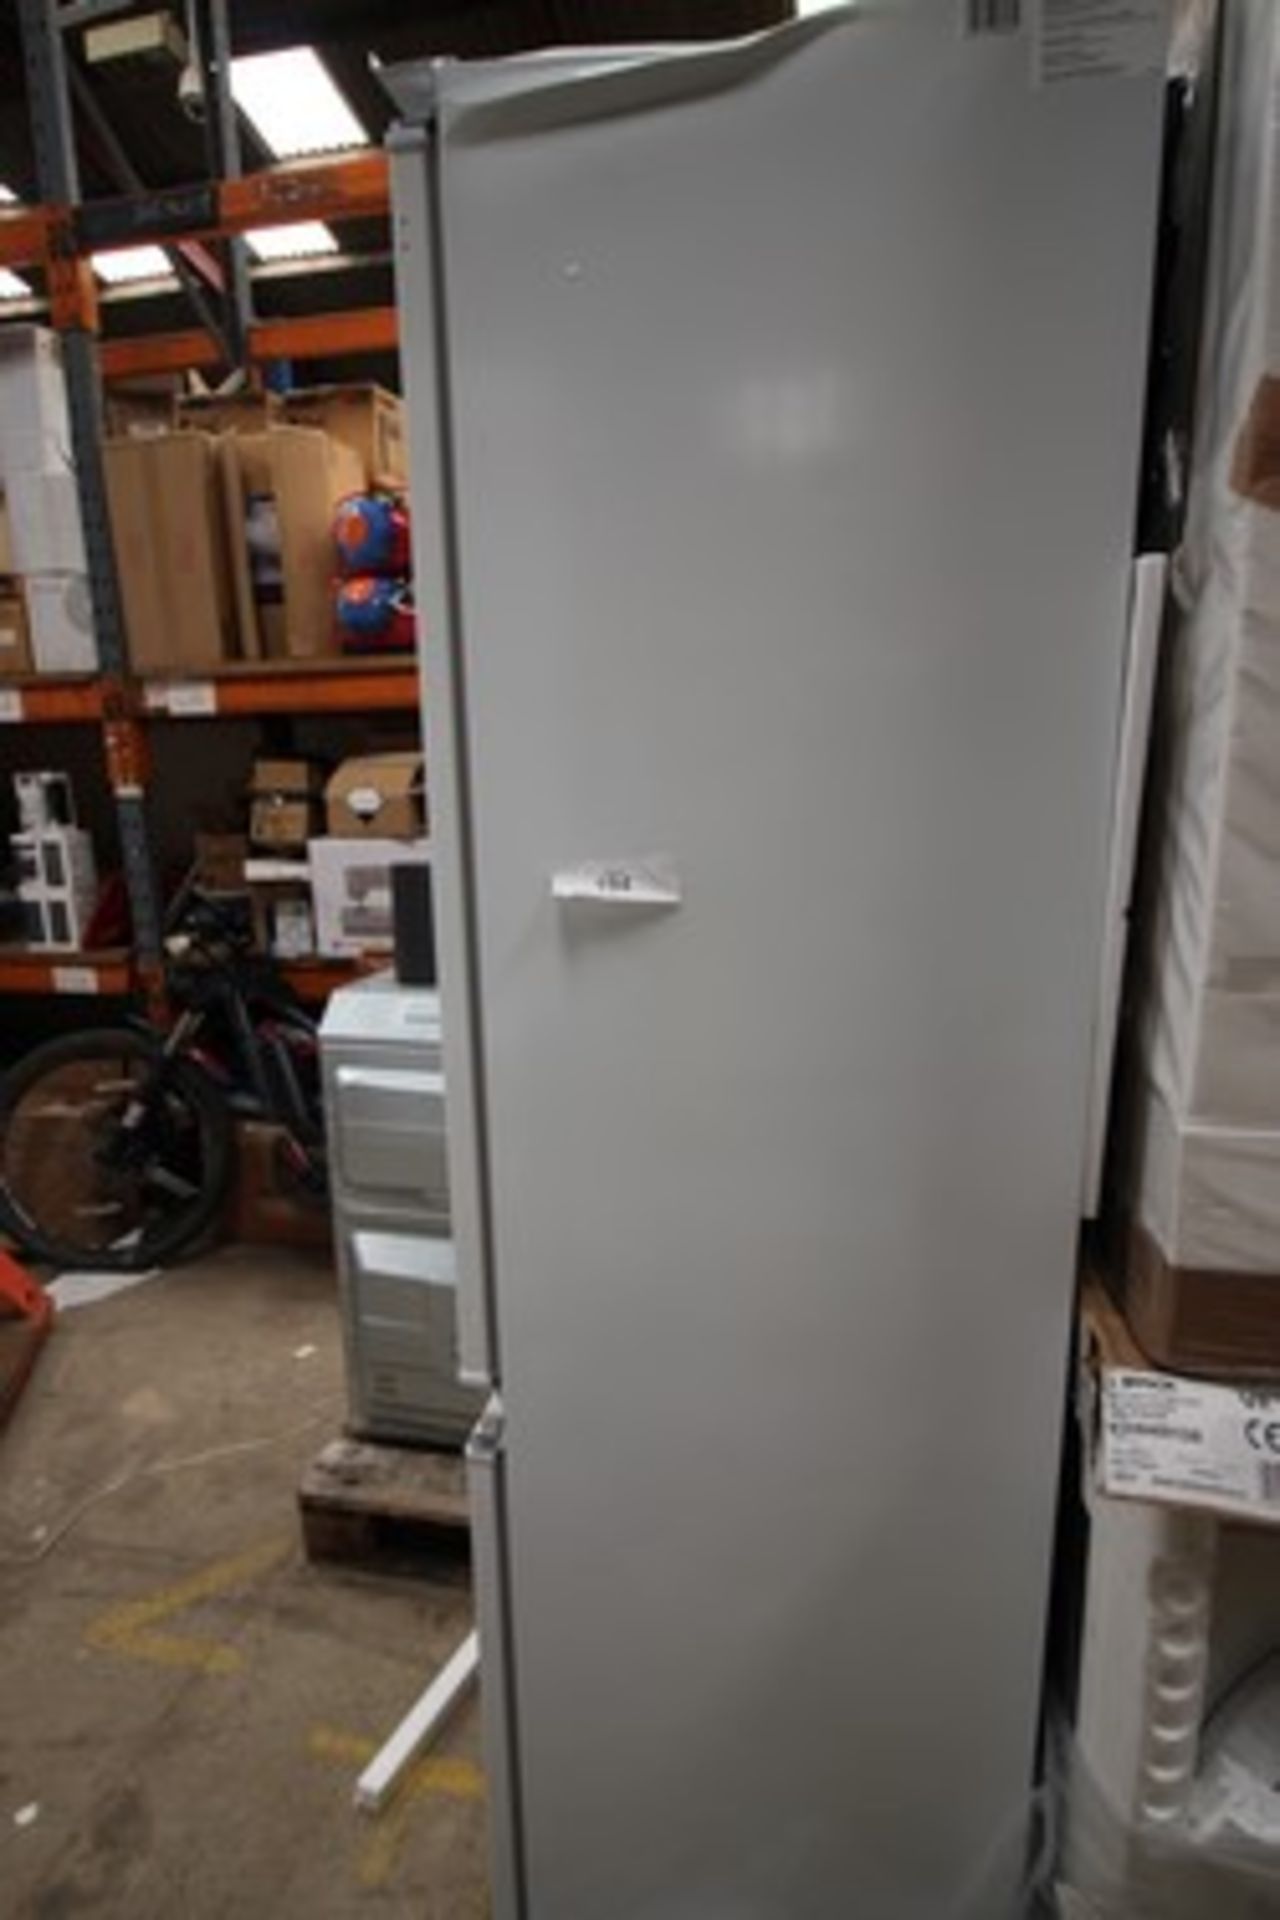 1 x Hisense built in fridge freezer, Model RIB312F4AWE, dented top right corner - New (eBay 10) - Image 4 of 5